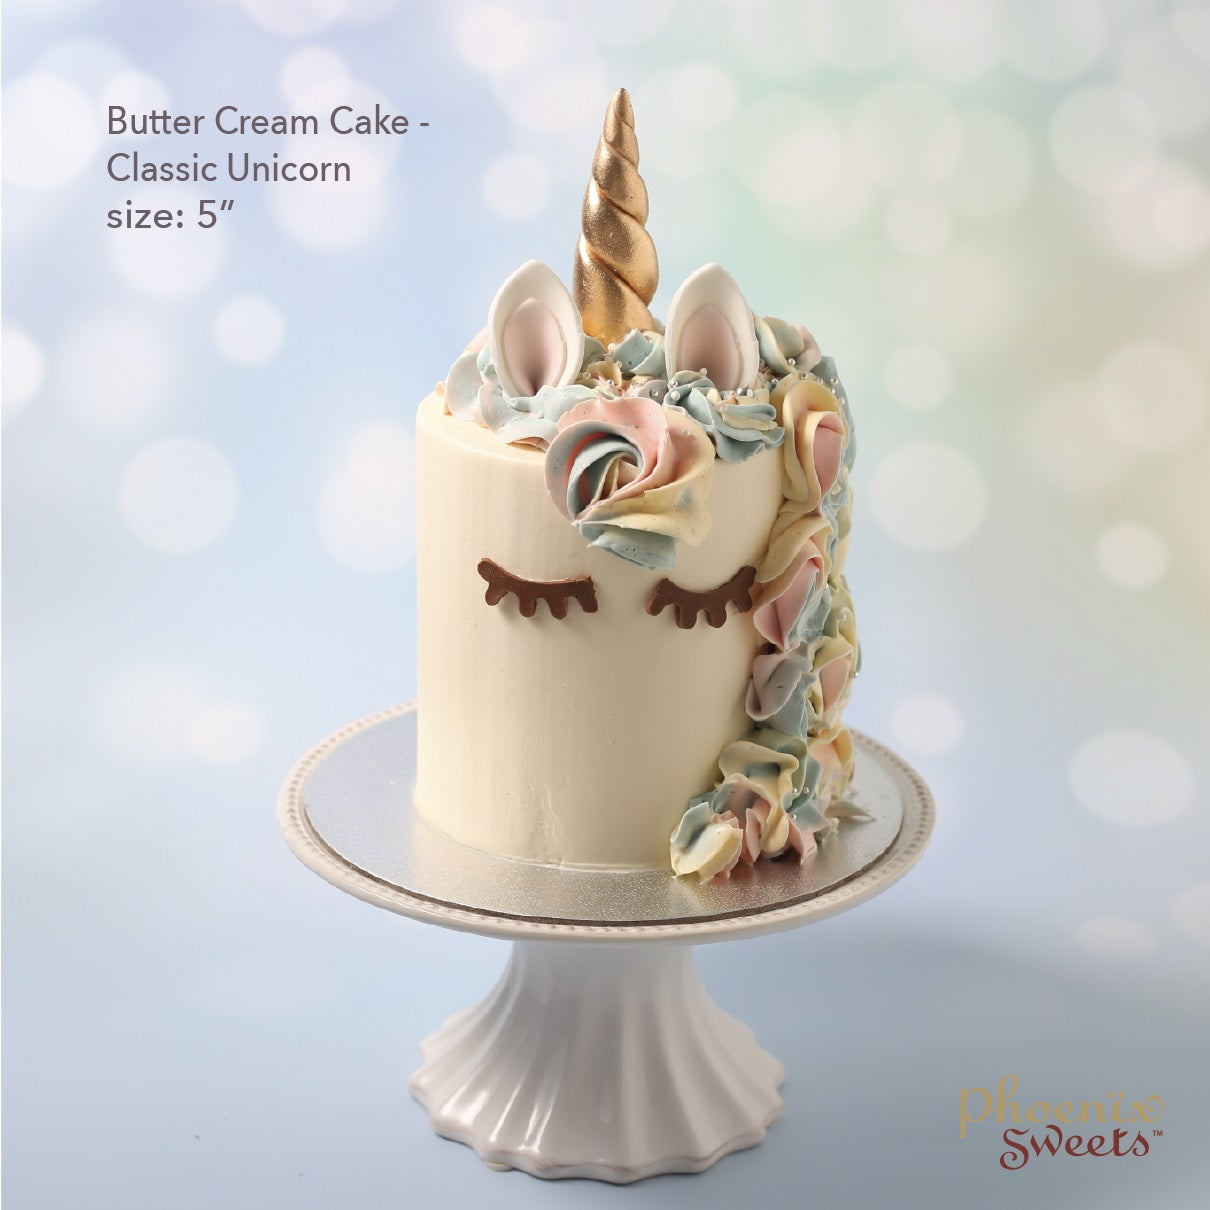 Butter Crean Cake - Classic Unicorn Bouquet & cake combo $2380